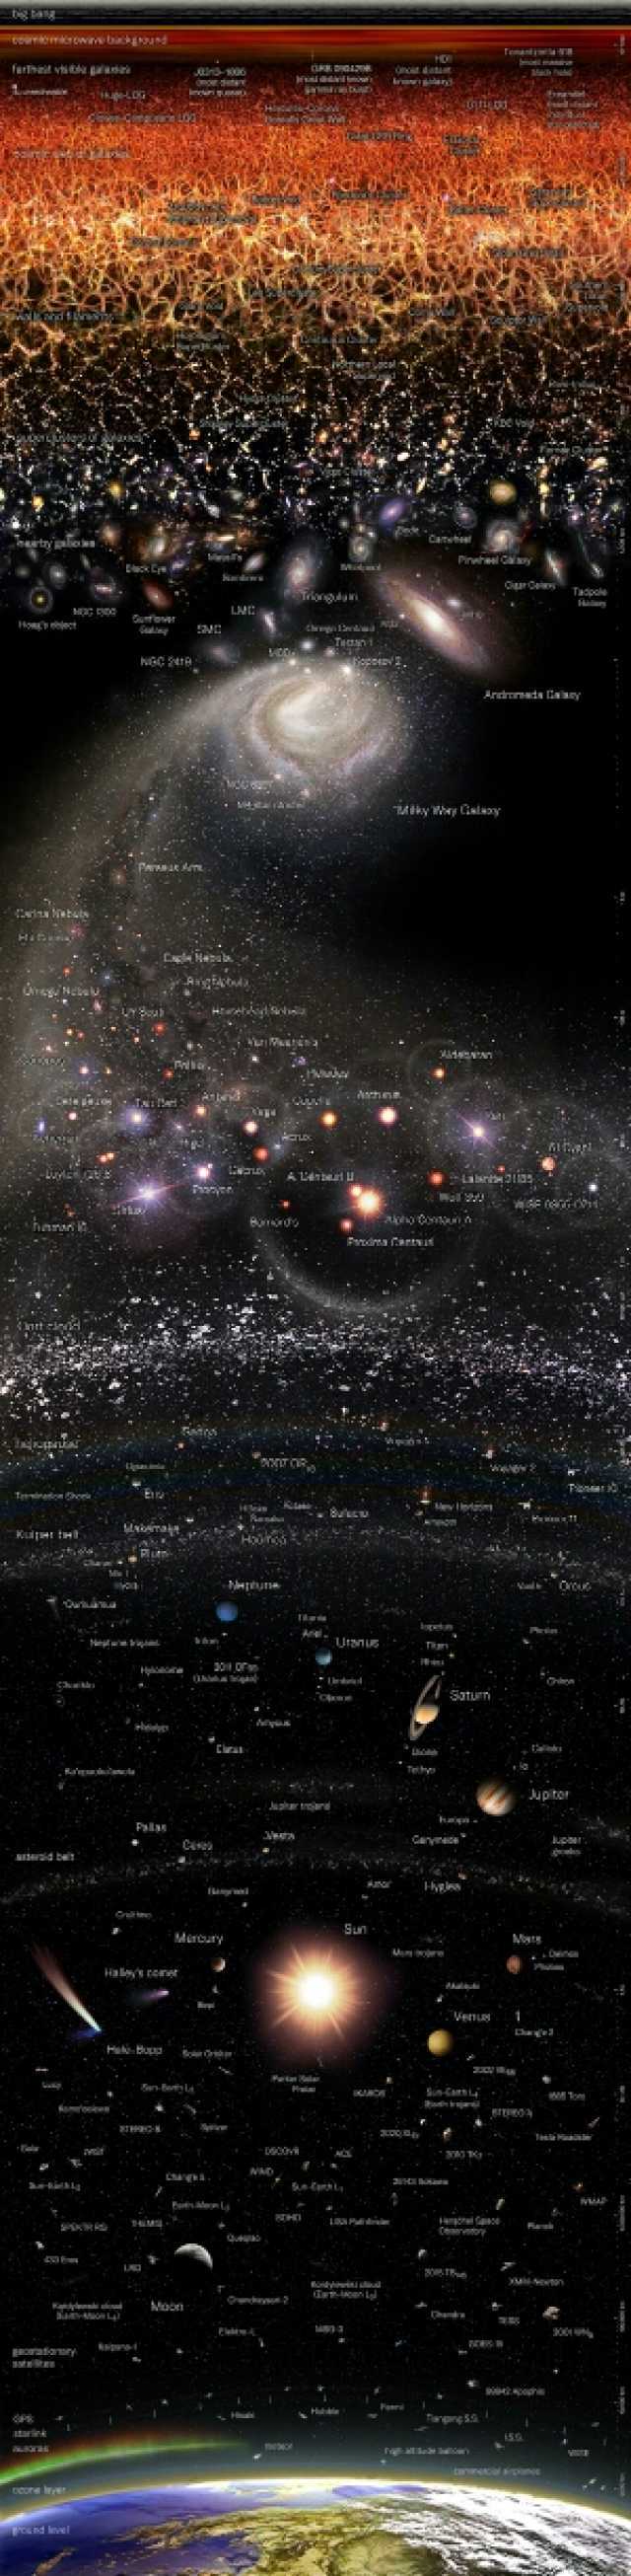 COsmic microwave back onantzinta ol8 HDI TartnestVISIDle galaxIGS black hole) Known guasa Ereandel Cartwheel Pinwhee Galaxy Ta0a ldnguium. LIM NO Suntiower A32 1110. ss ob jalaxy C 2419 Koposov 2 Andromeda Galaxy y Way Galaxy a ve